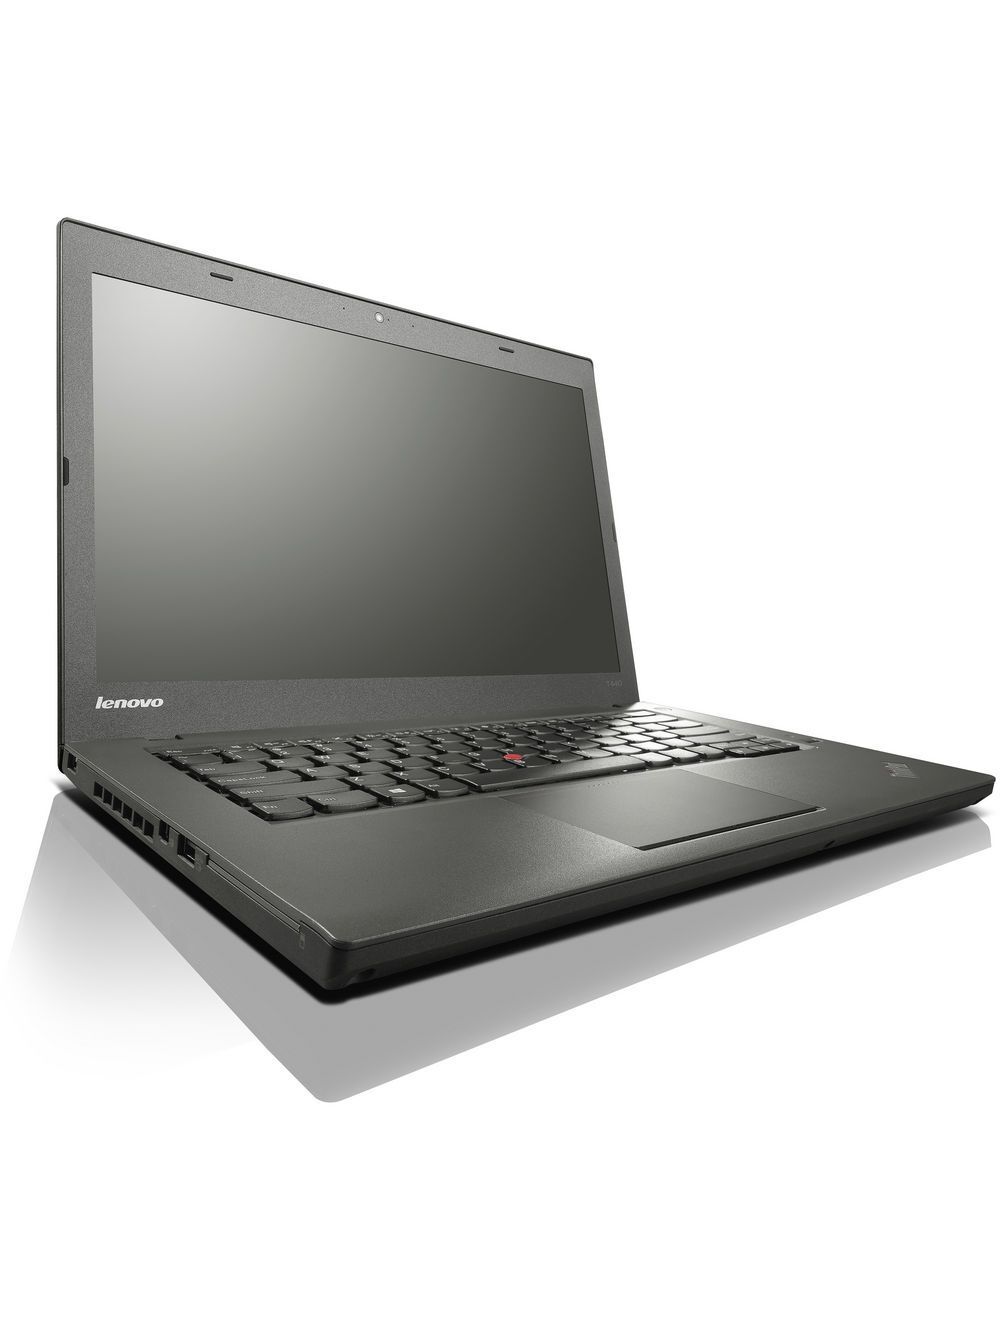 Lenovo ThinkPad T440s Intel i5 4300U 1.90GHz 8GB RAM 500GB HDD 14" NO OS Image 1